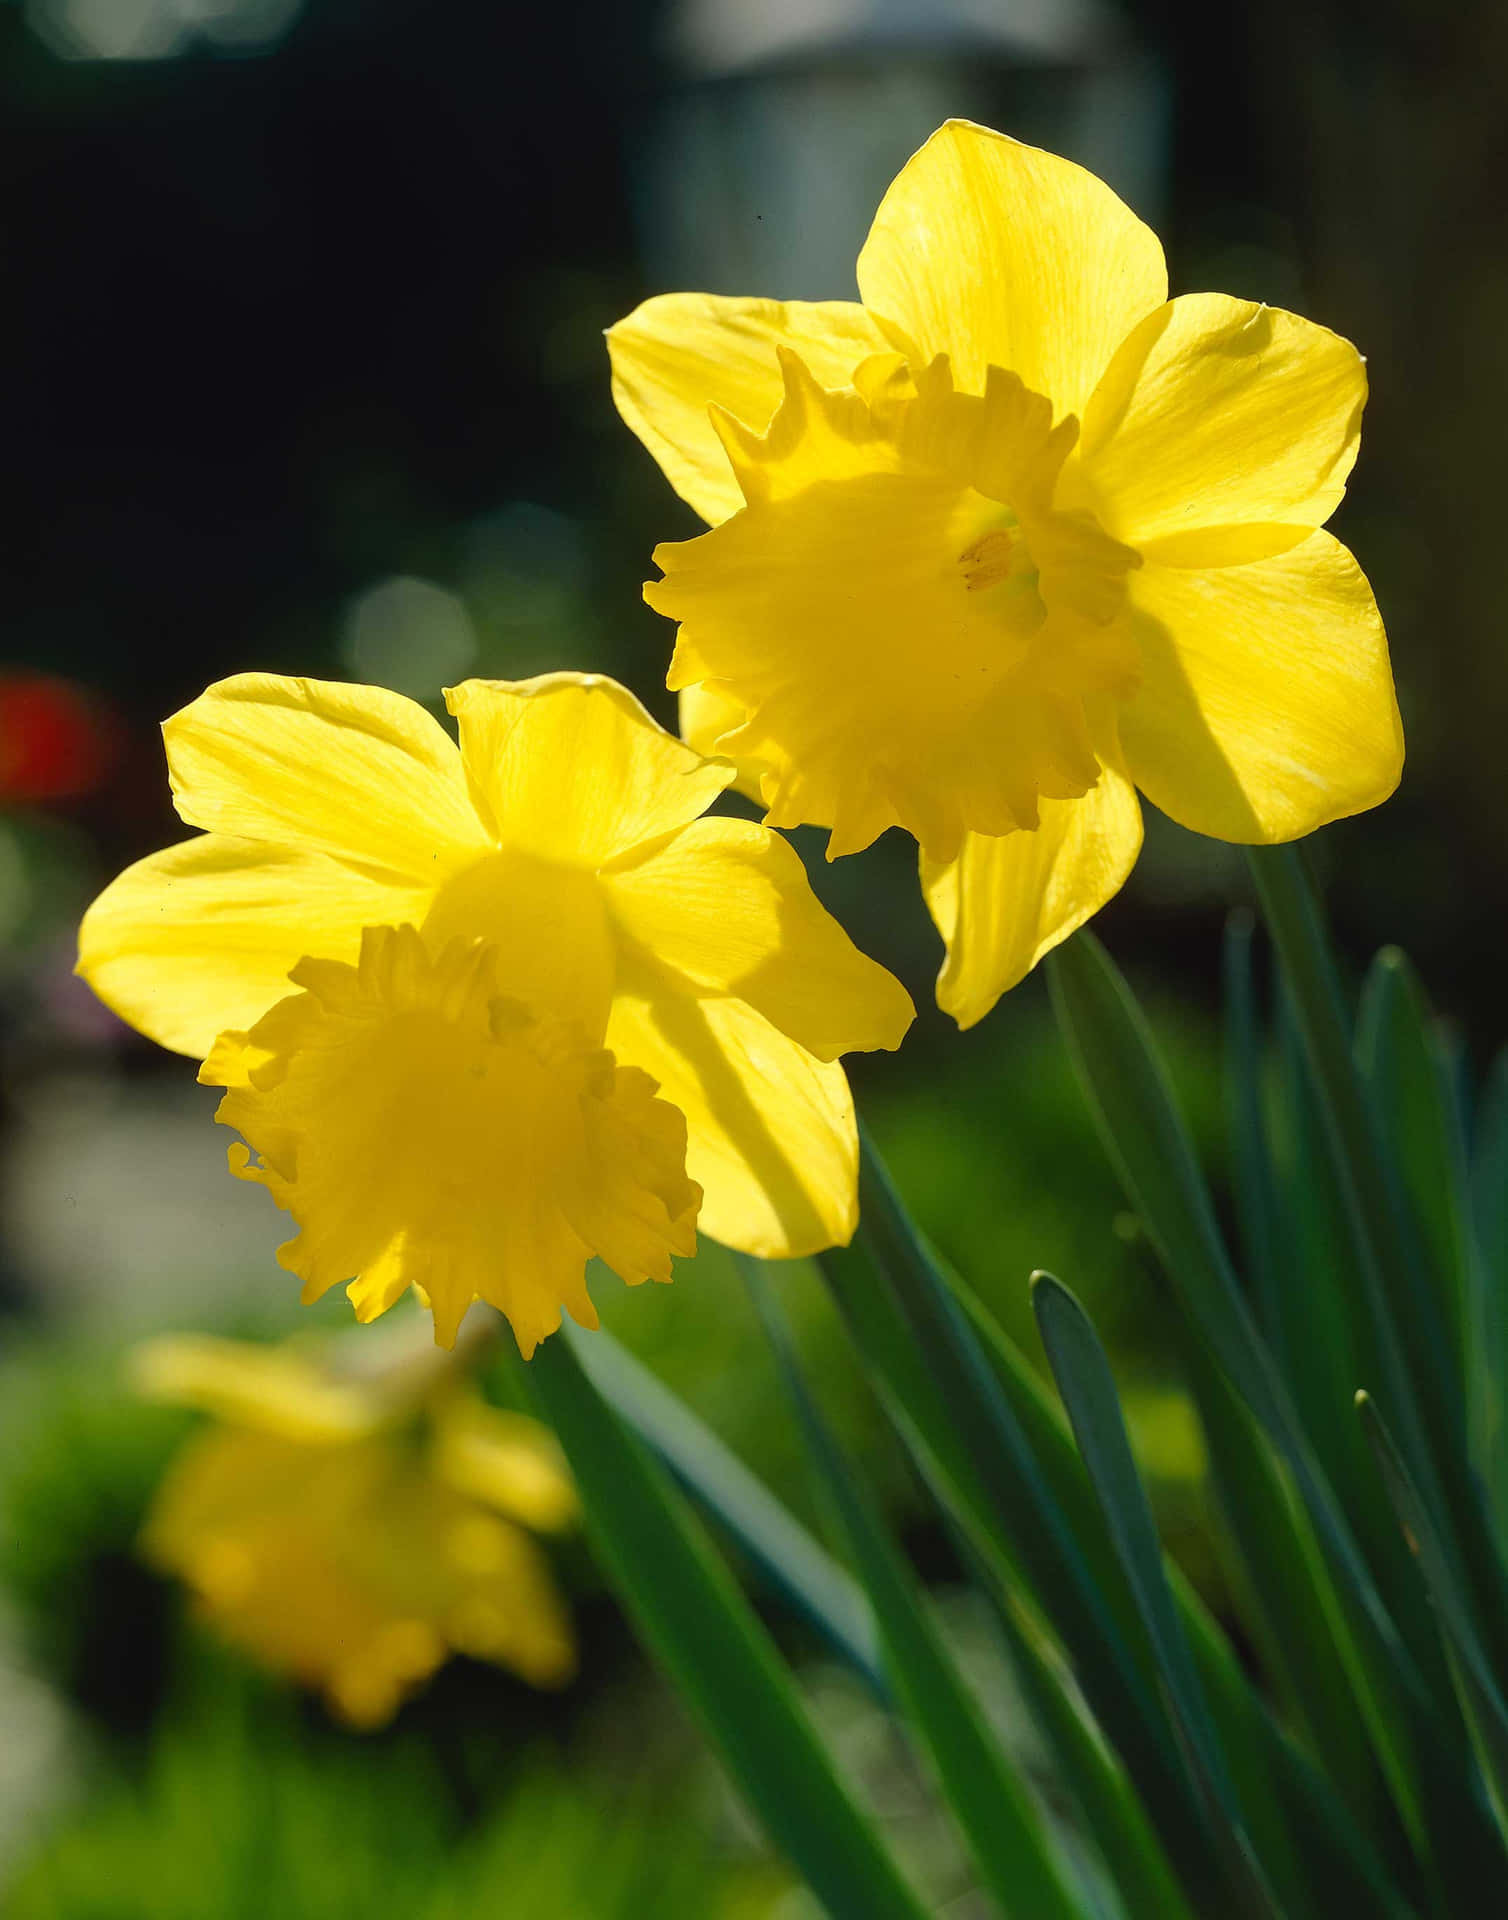 Daffodil in Vibrant Blooming